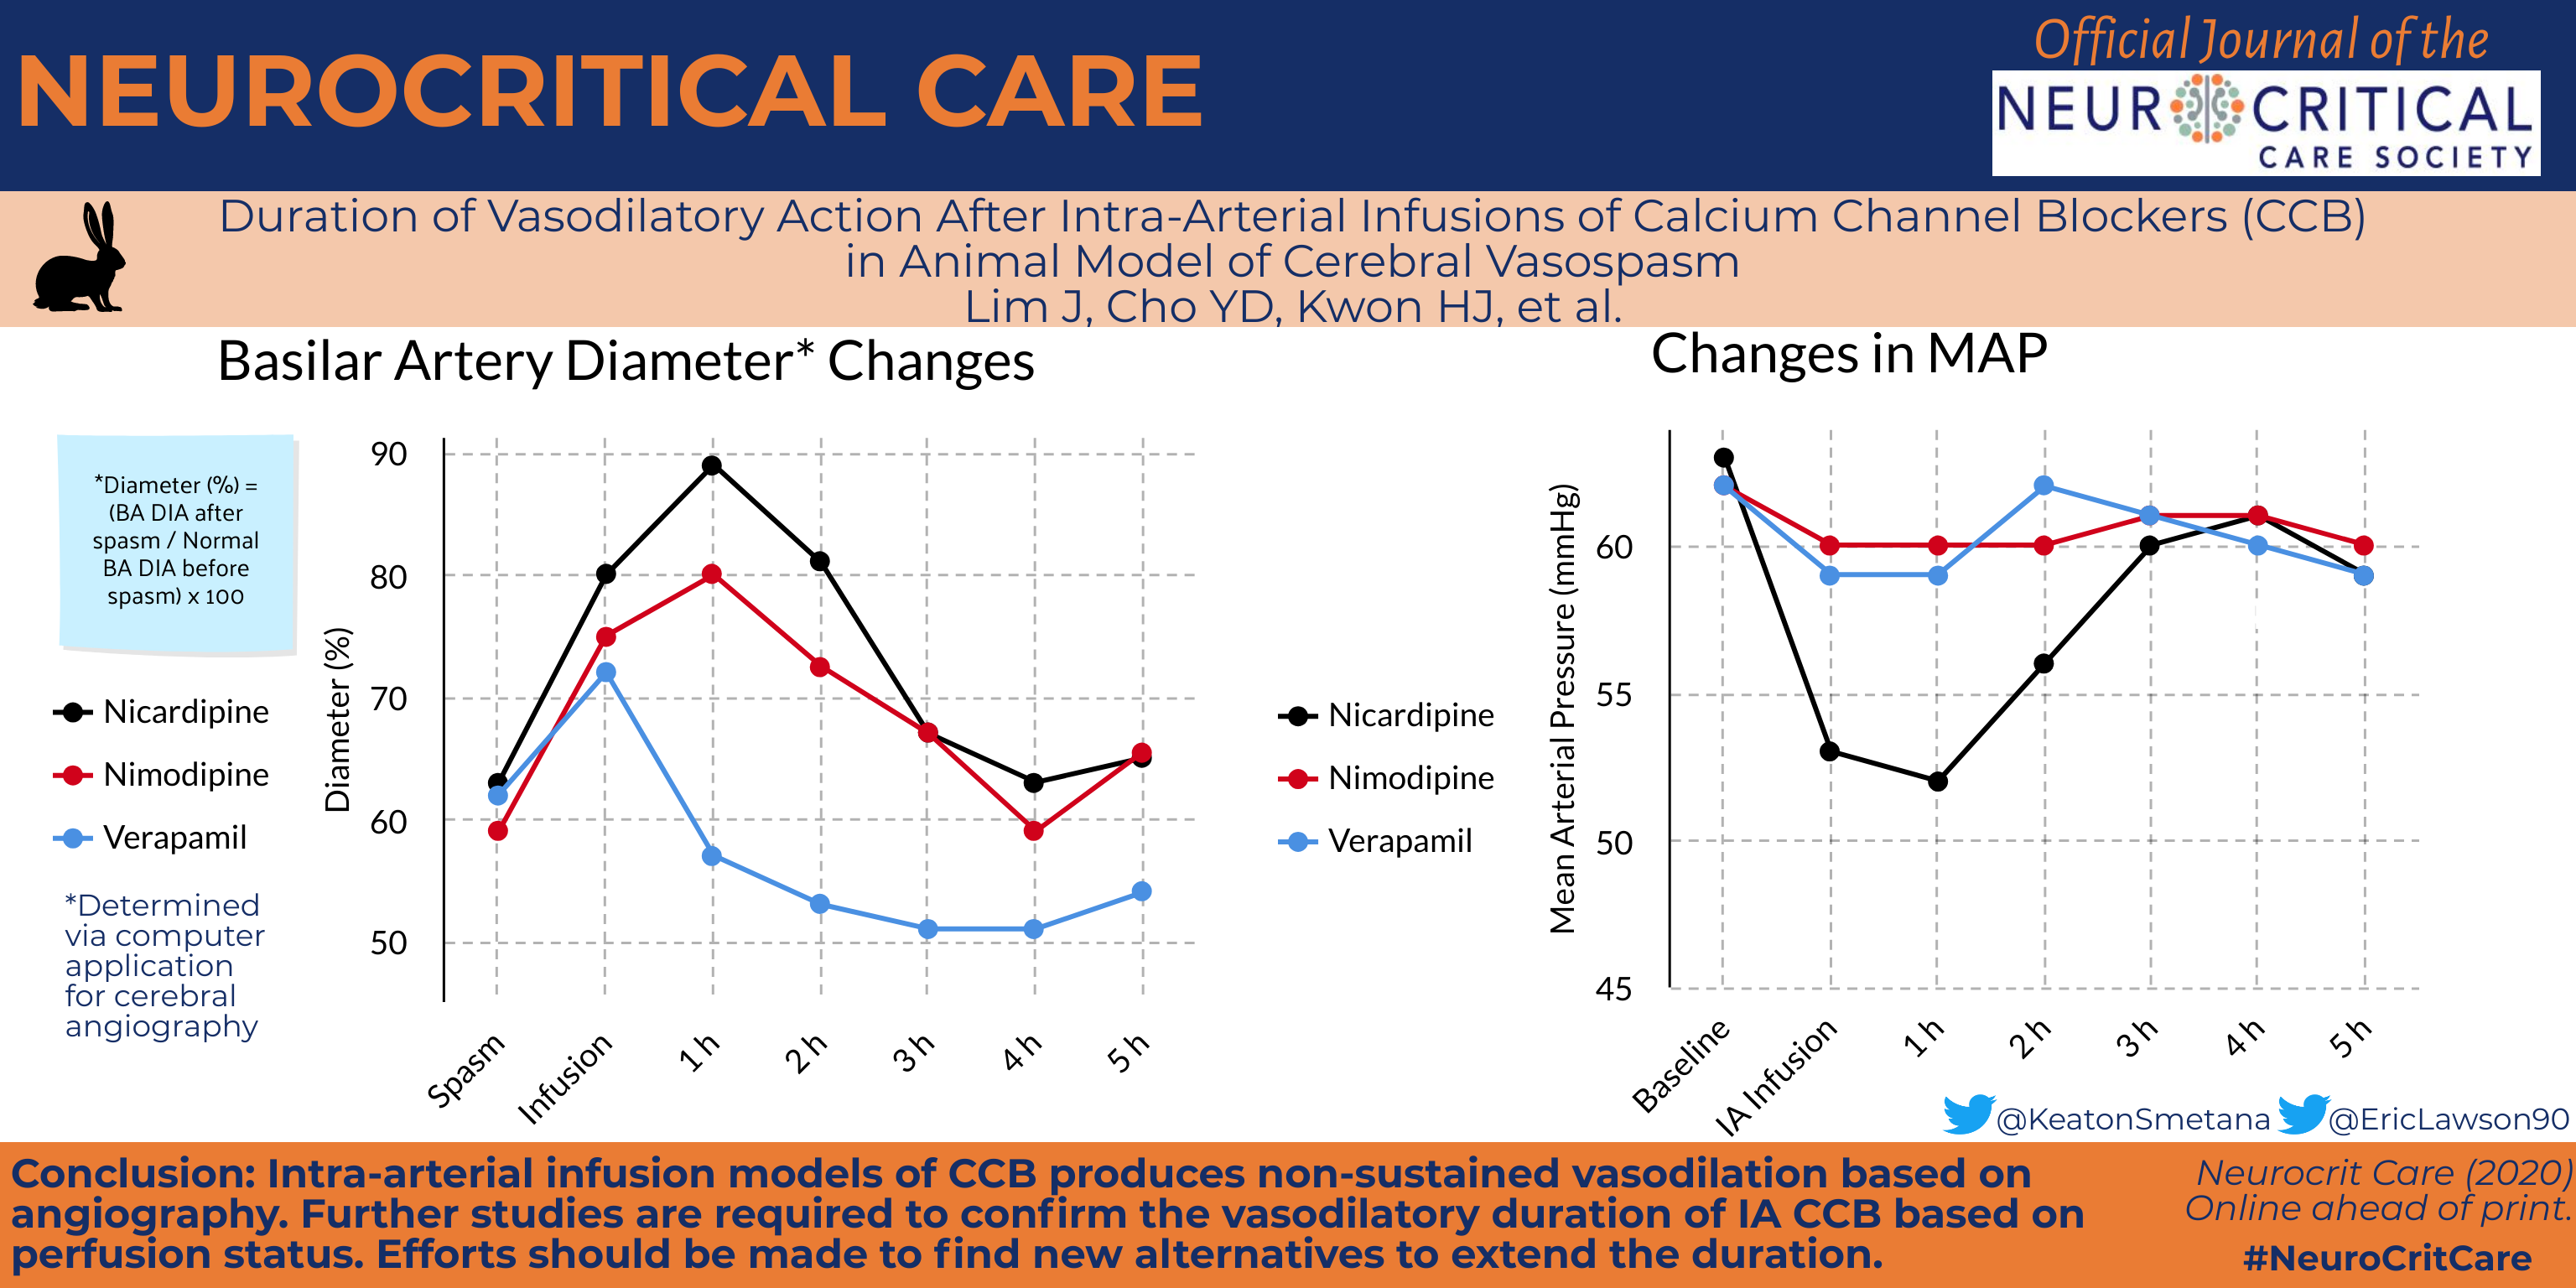 Duration of Vasodilatory Action After Intra-arterial Infusions of Calcium Channel Blockers in Animal Model of Cerebral Vasospasm